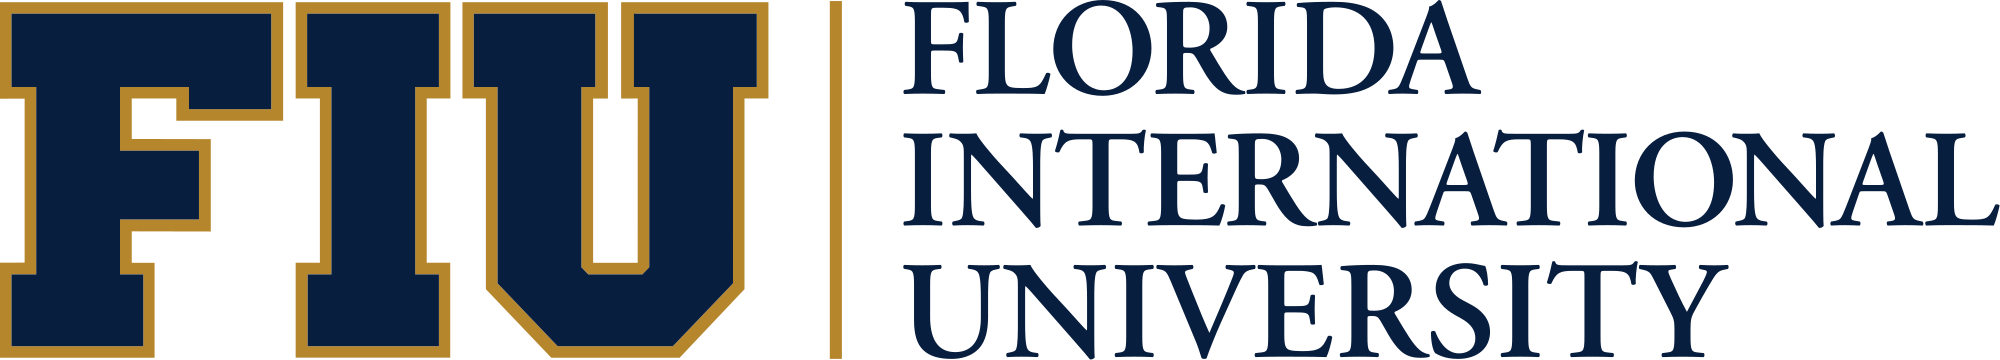 Florida International University Logo - Florida International University logo.svg